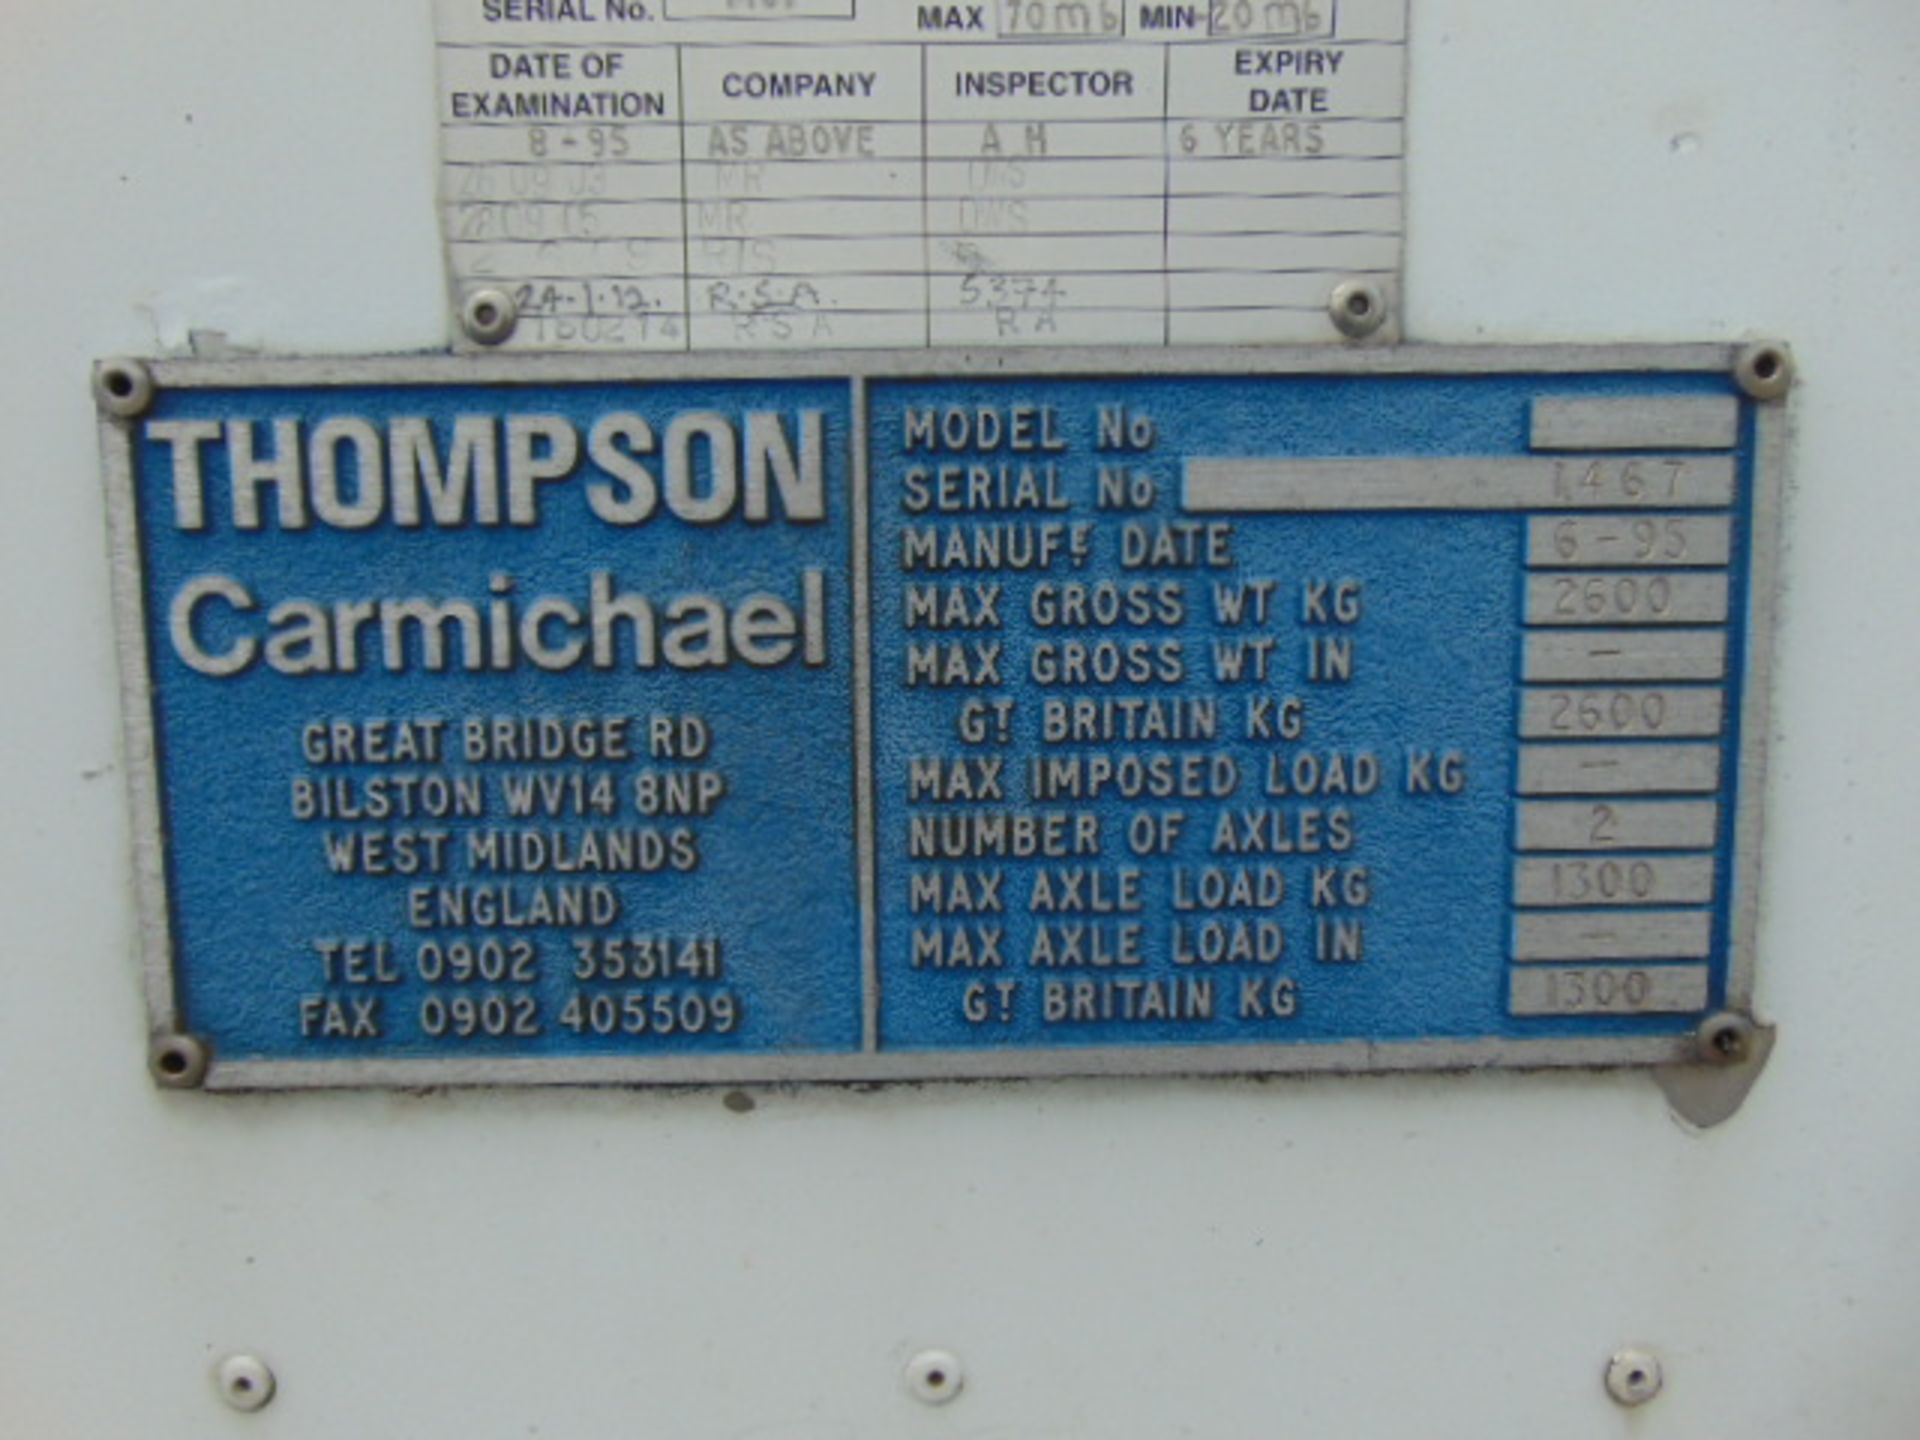 Thomson Carmichael Light Aircraft 975Ltr Avgas Fuel Bowser Trailer - Image 15 of 17